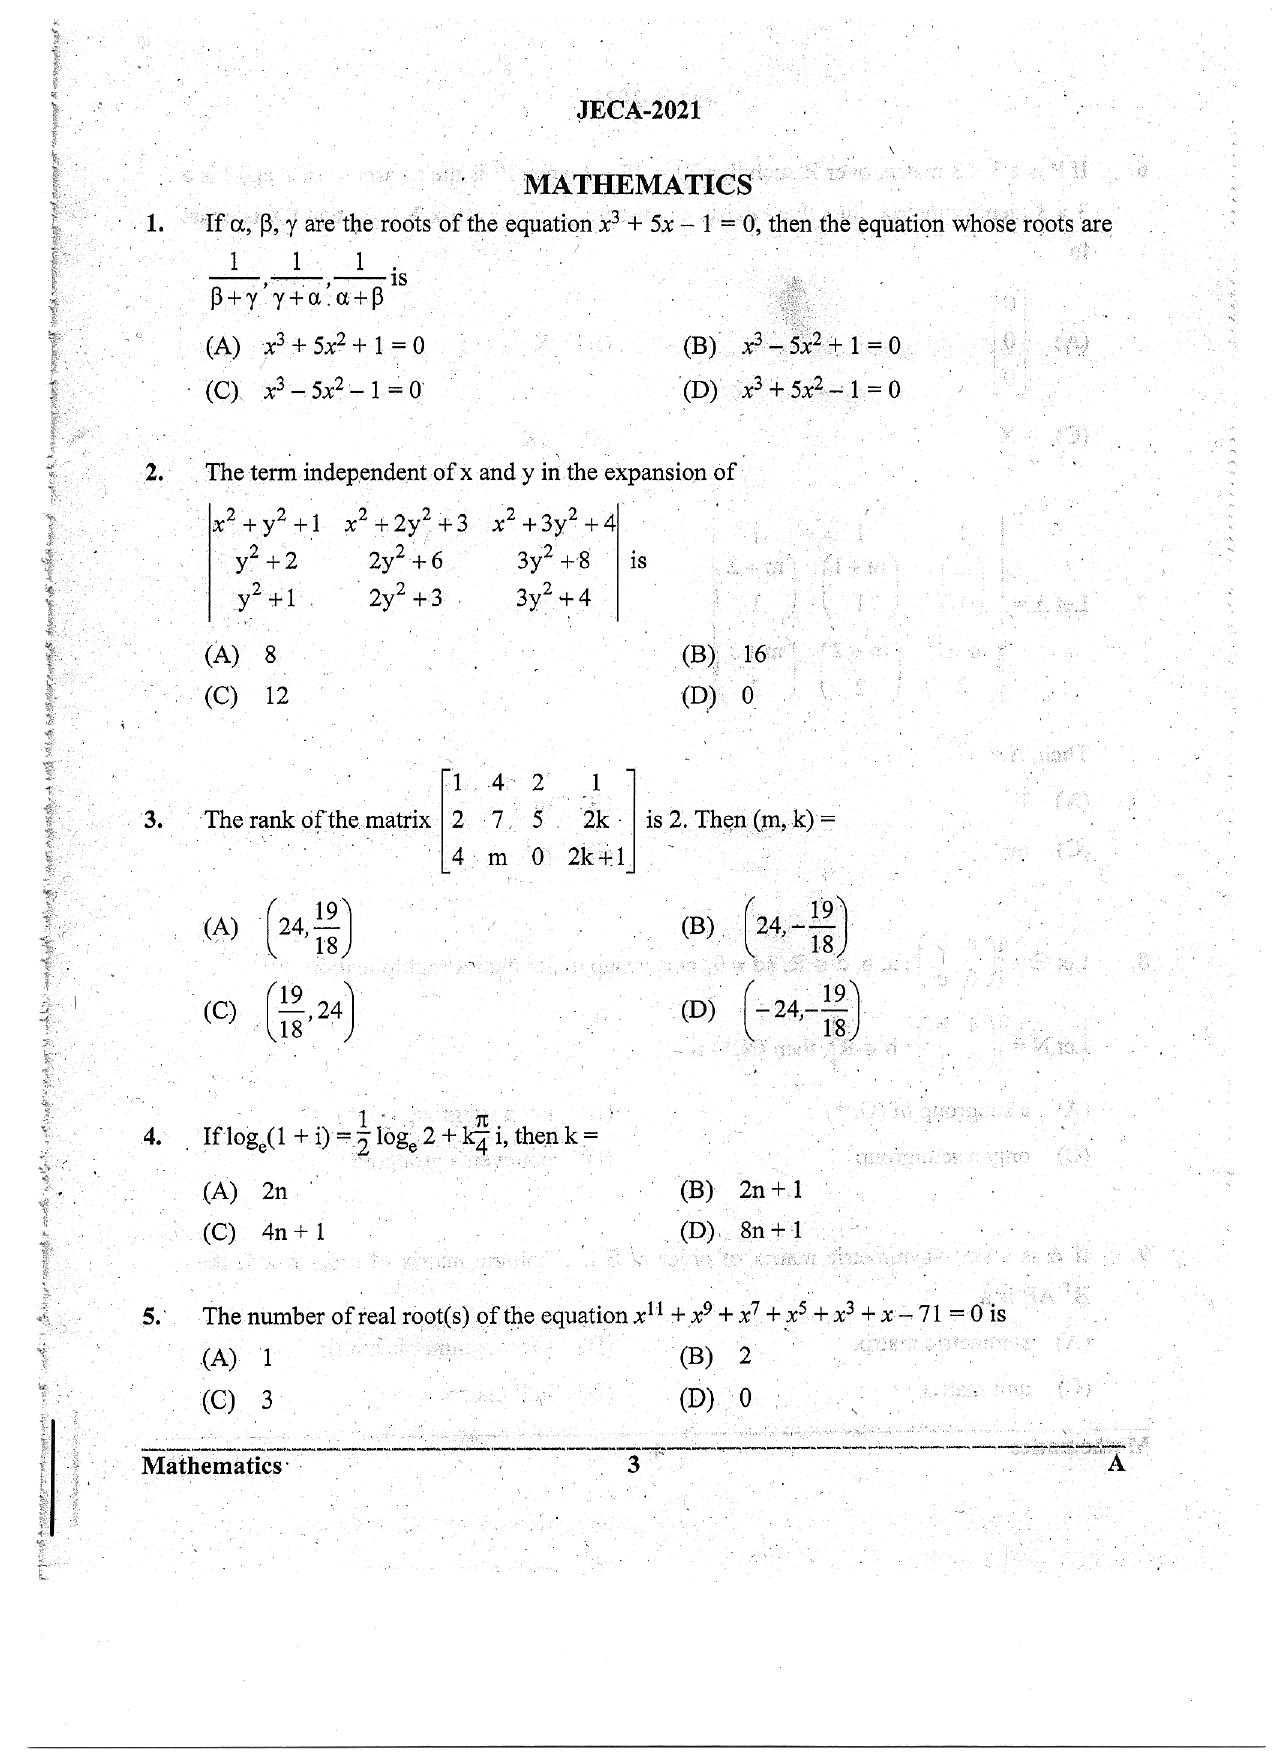 WB JECA 2021 Mathematics Question Paper - Page 3